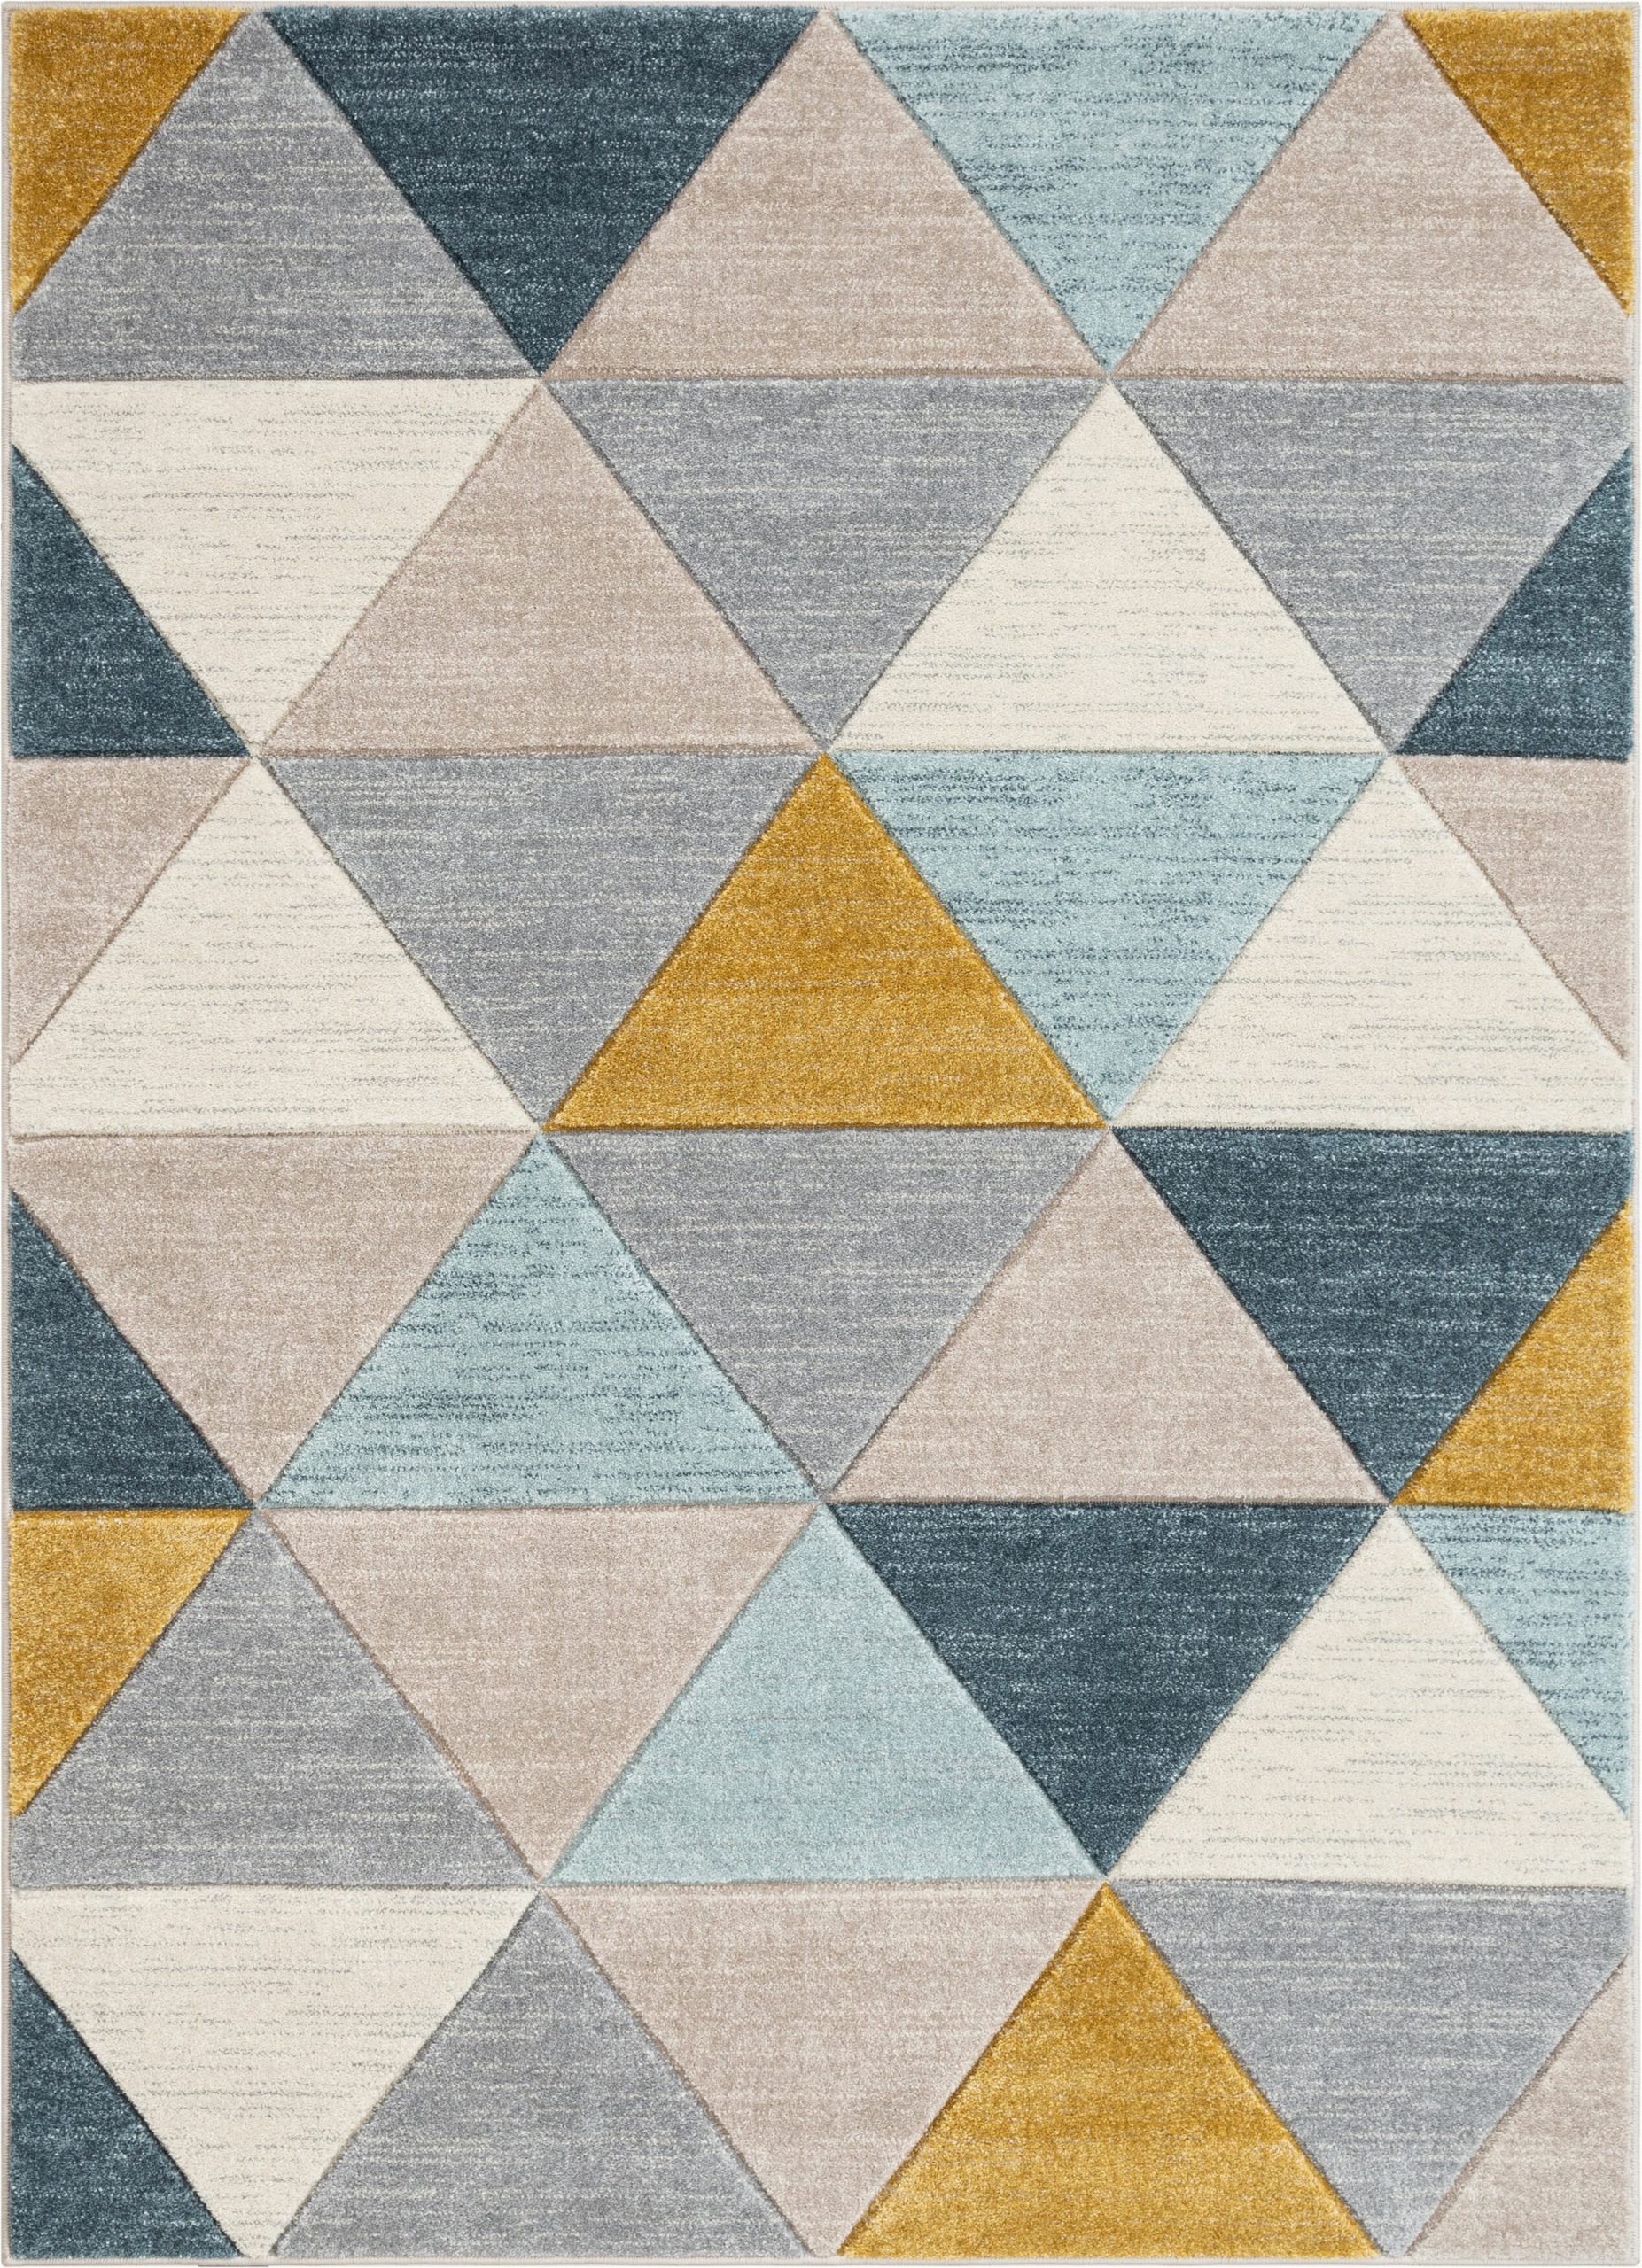 ruby rita mid century modern geometric triangles bluemintivory area rug